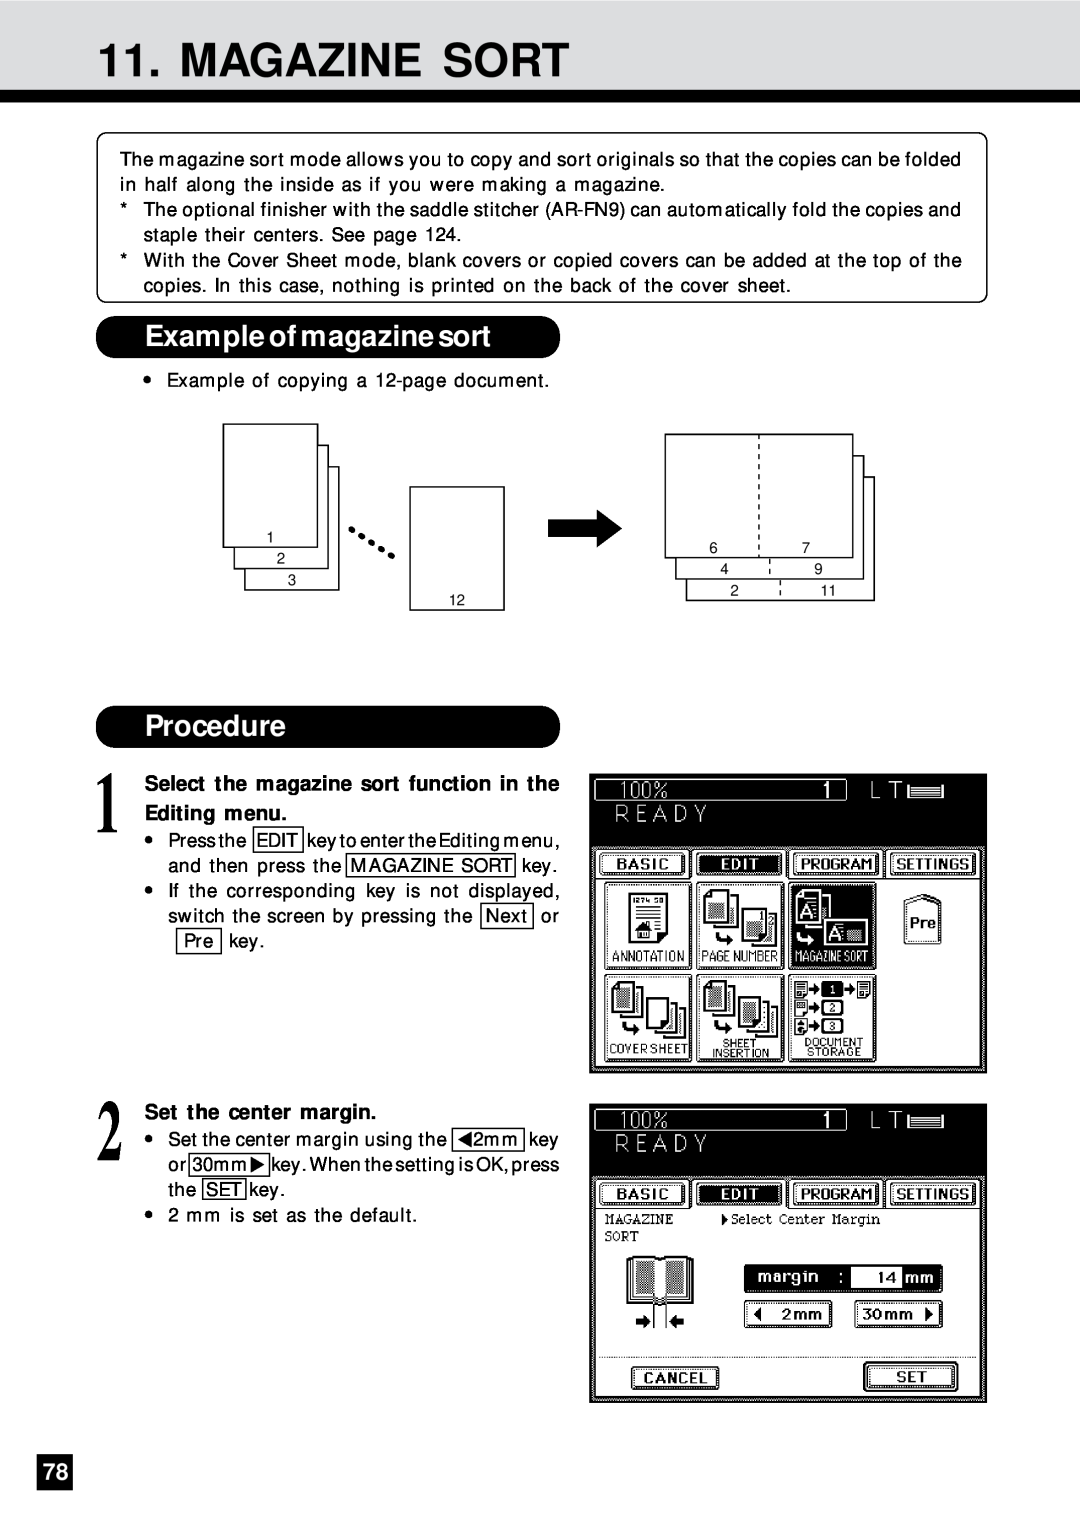 Sharp AR-650 Magazine Sort, Example of magazine sort, Select the magazine sort function in the Editing menu, Procedure 